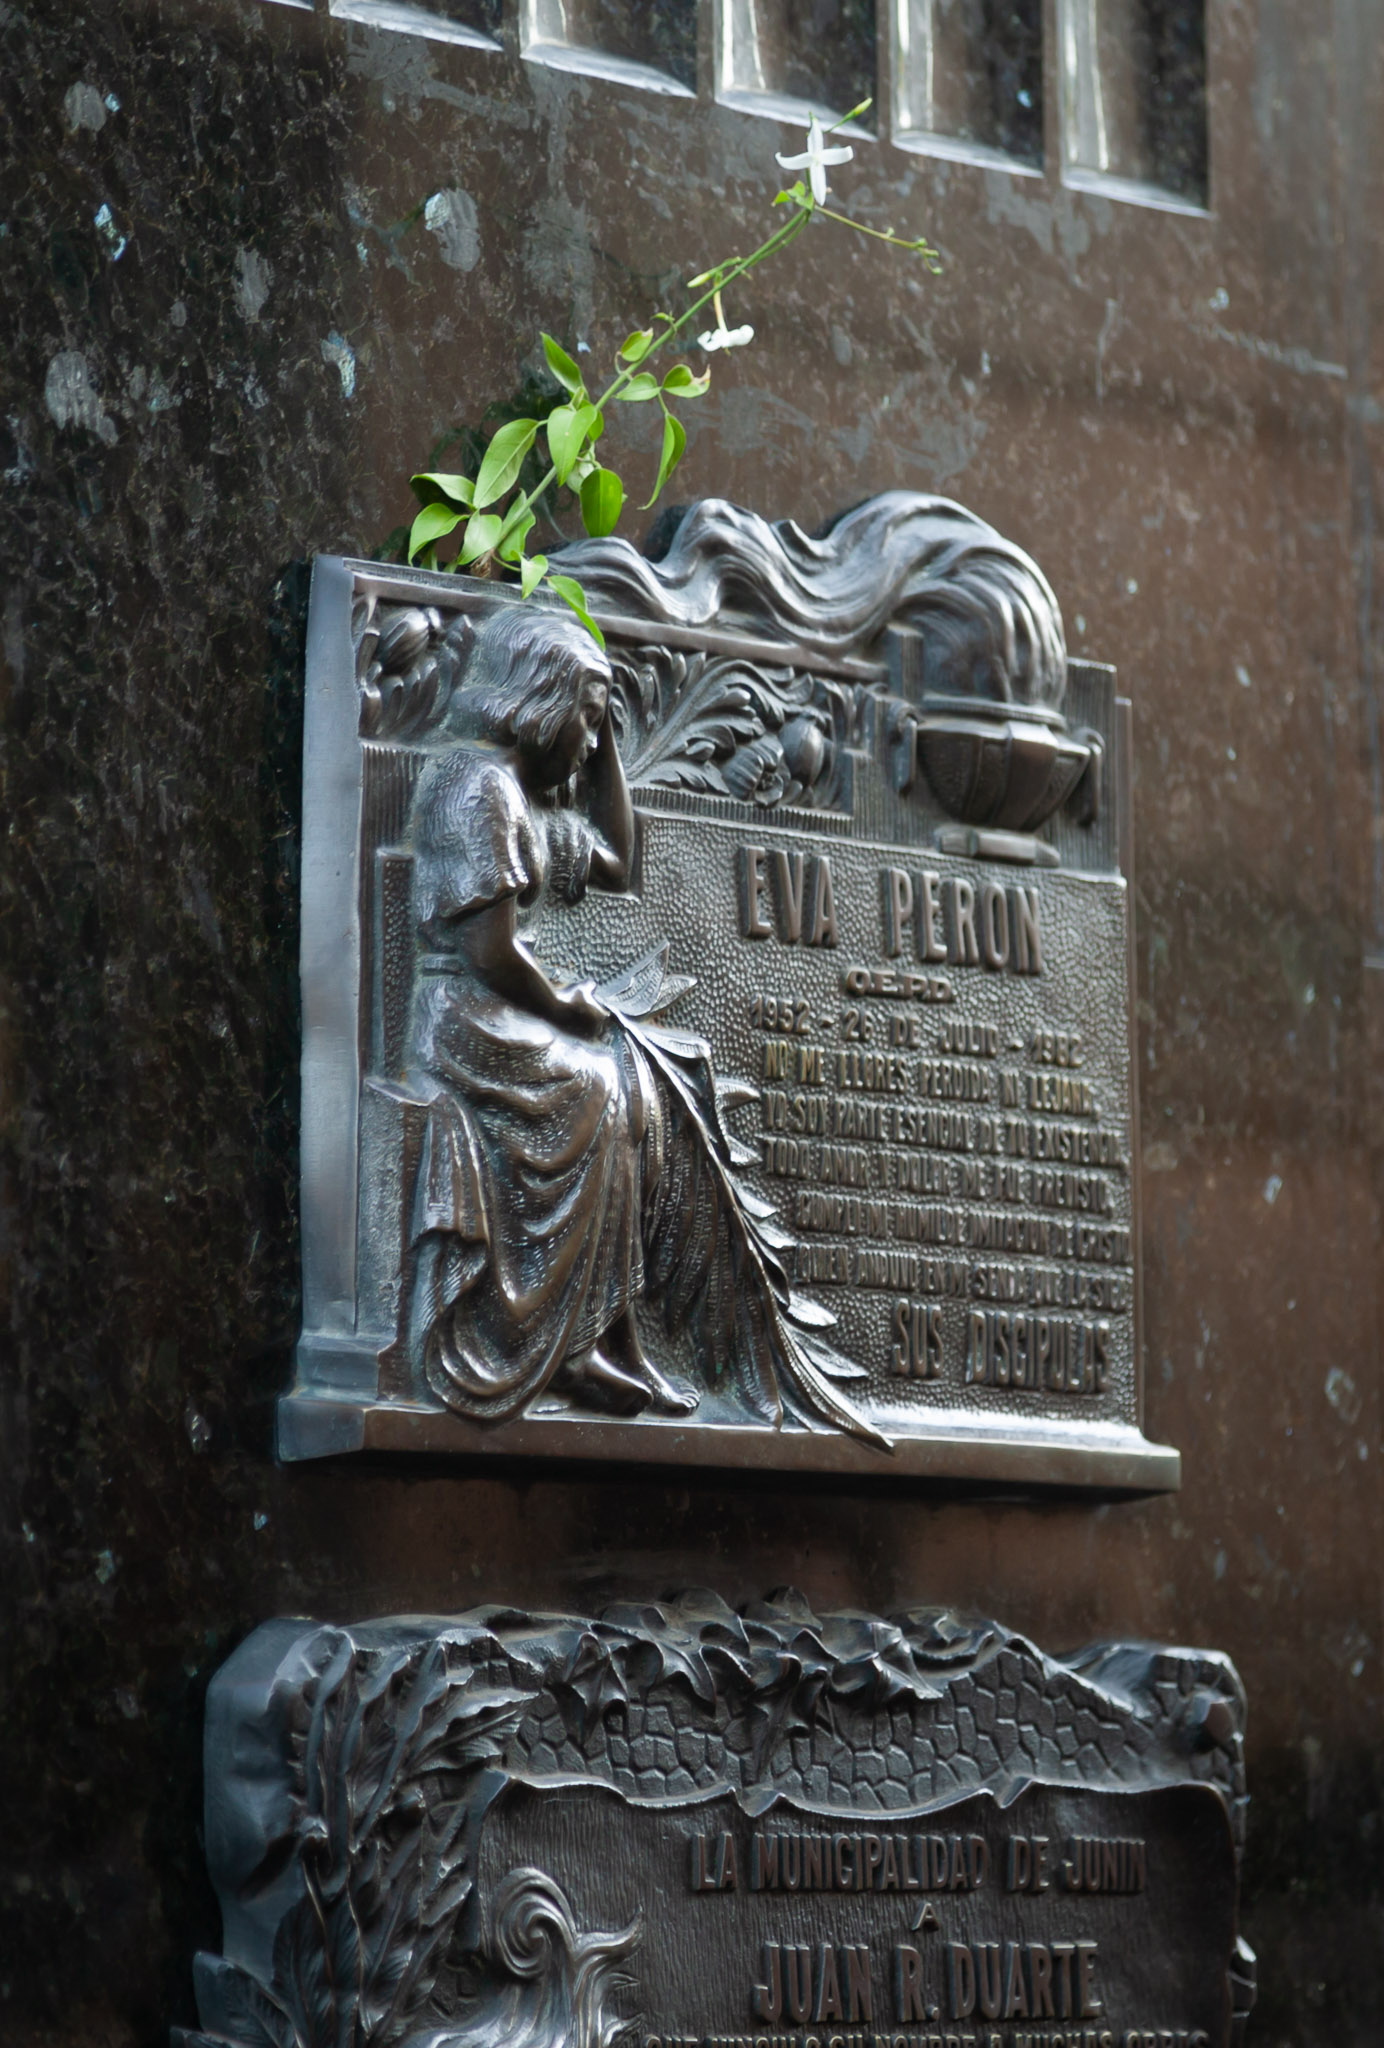 Eva Peron's tomb